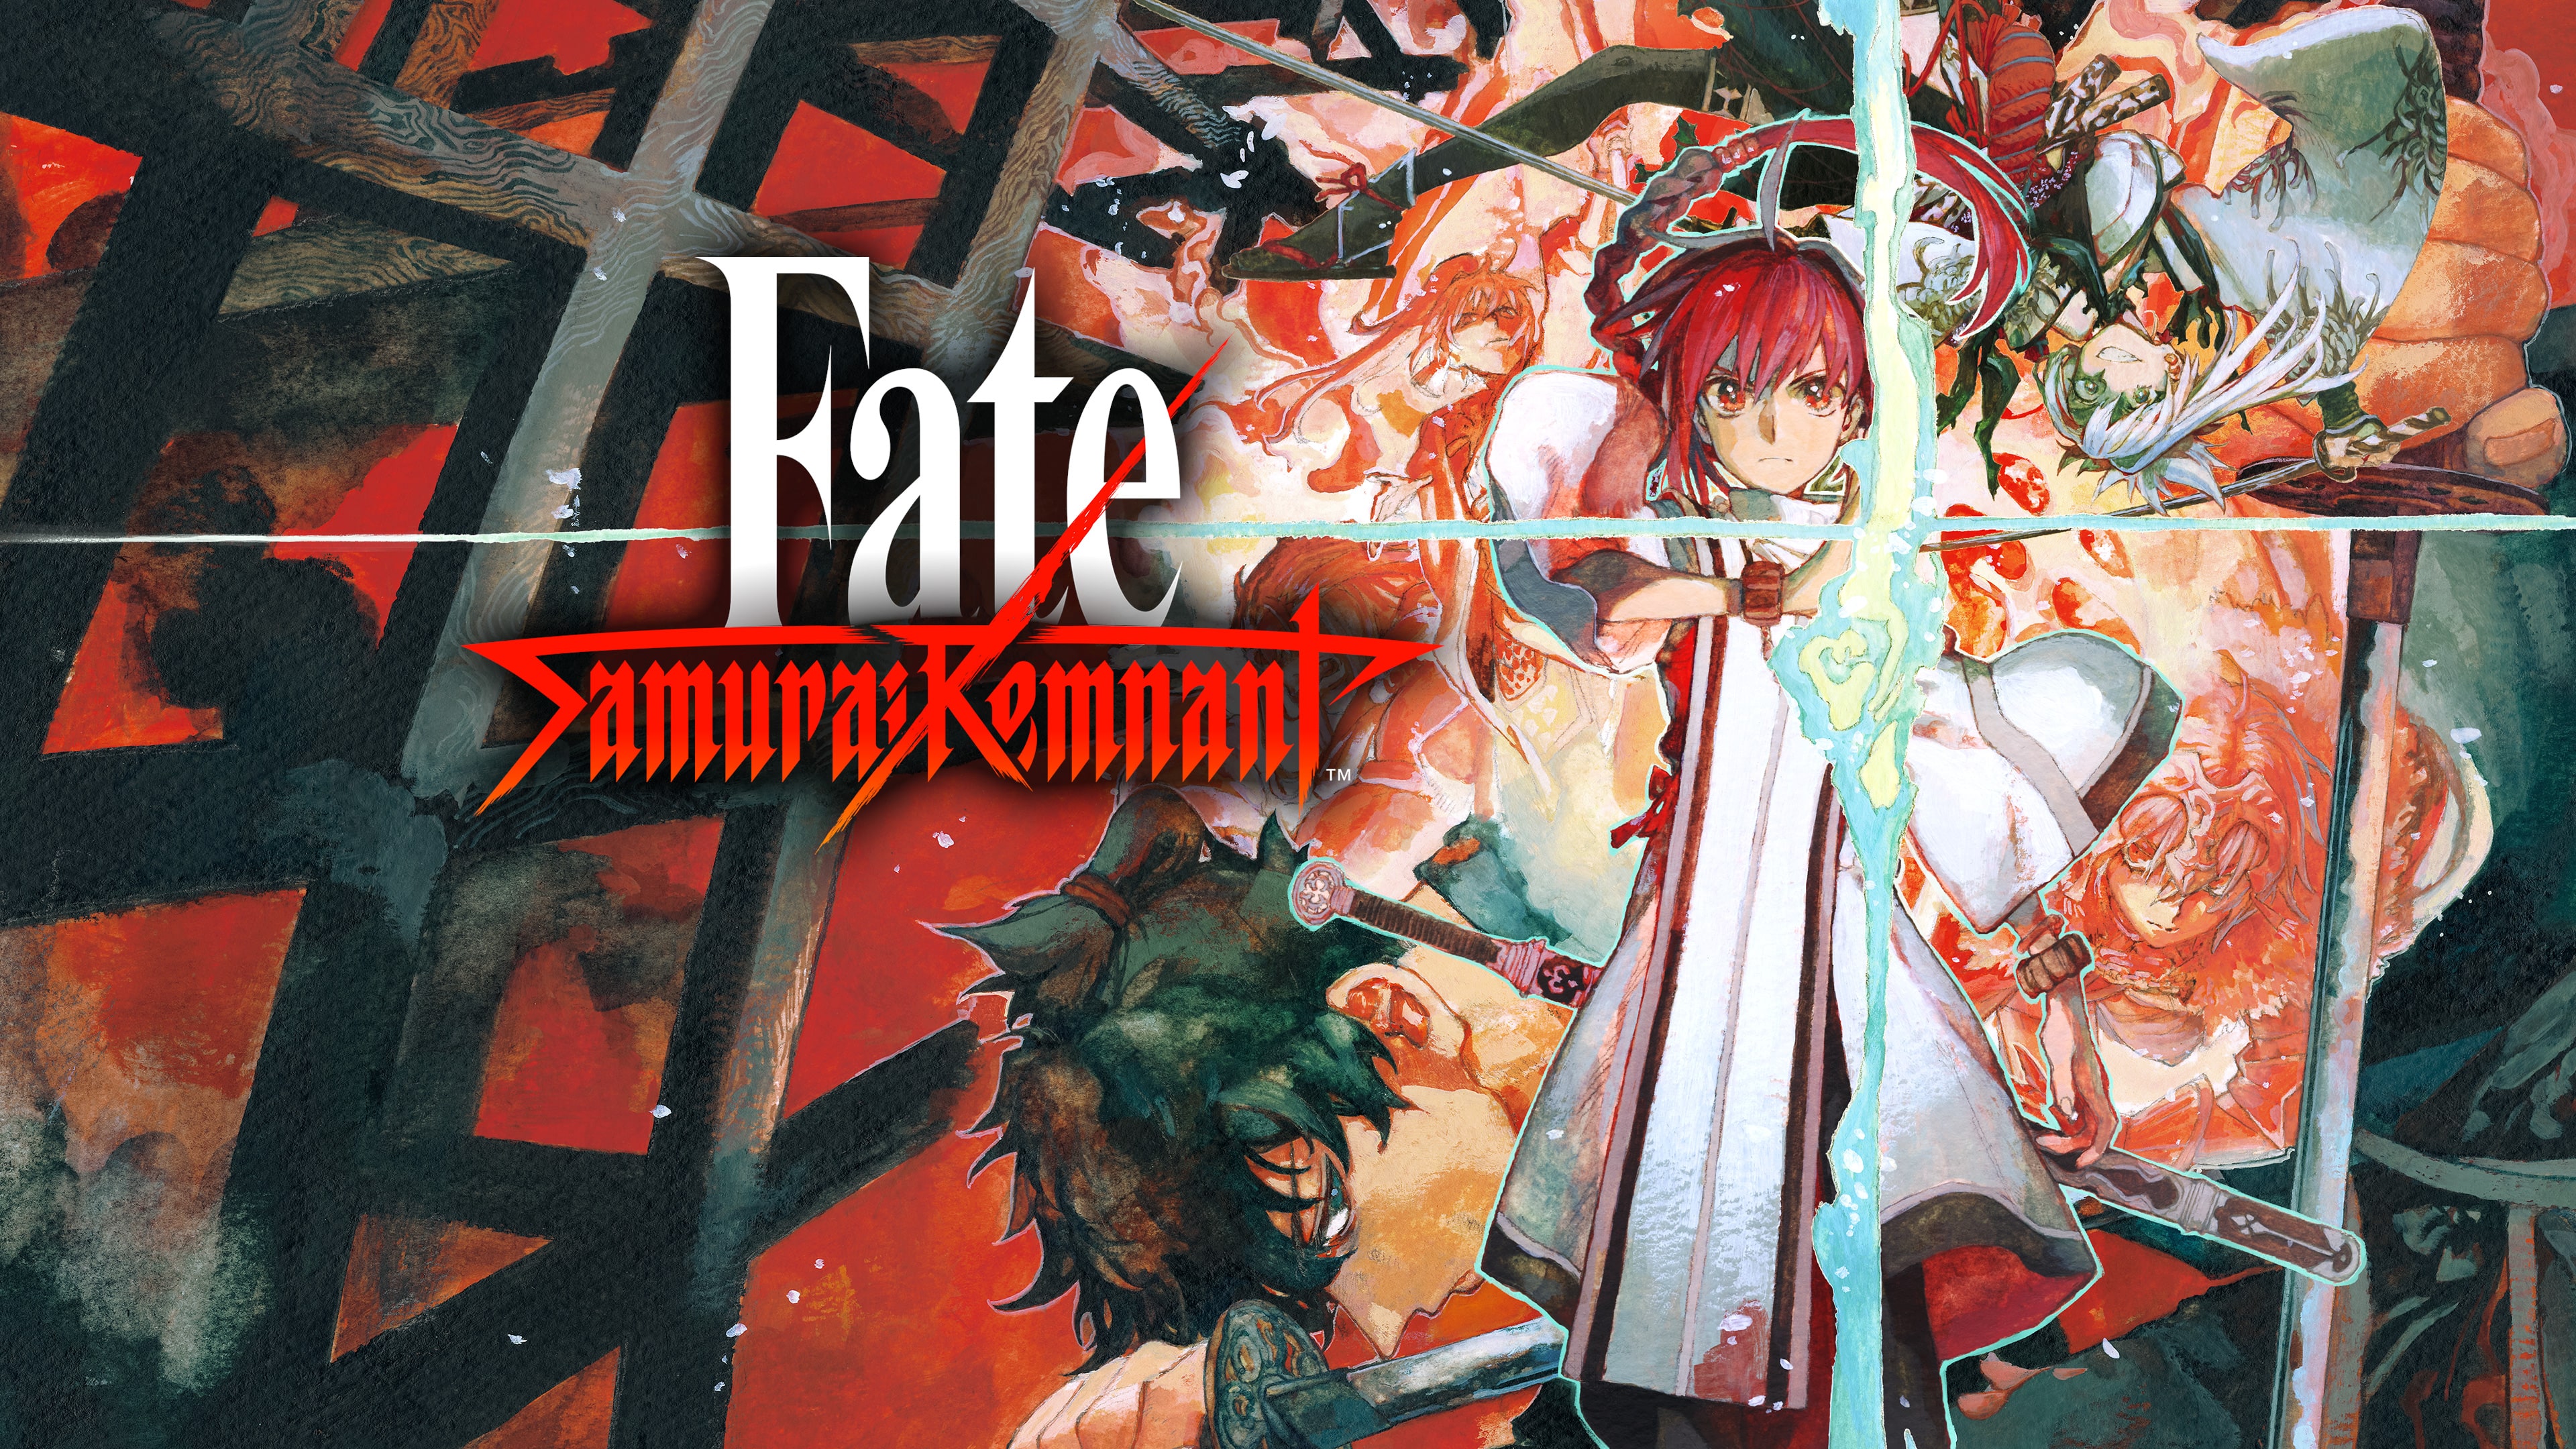 Fate/Samurai Remnant Digital Deluxe Edition (English) (PS4 & PS5 